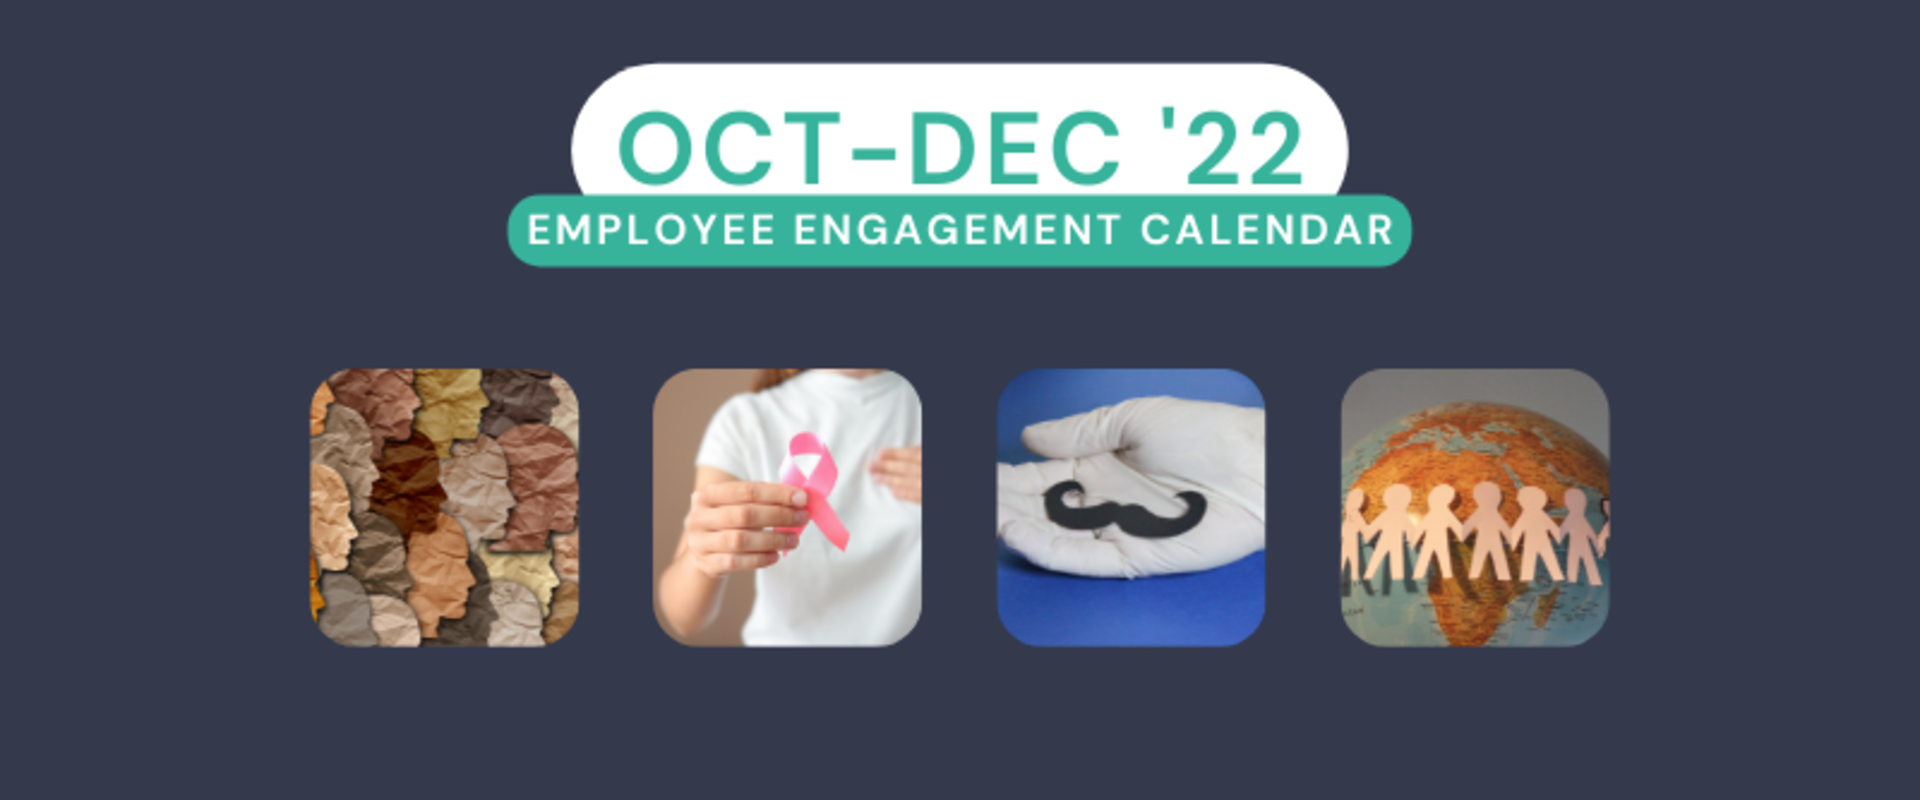 Employee Engagement Calendar - FREE DOWNLOAD (Oct-Dec)